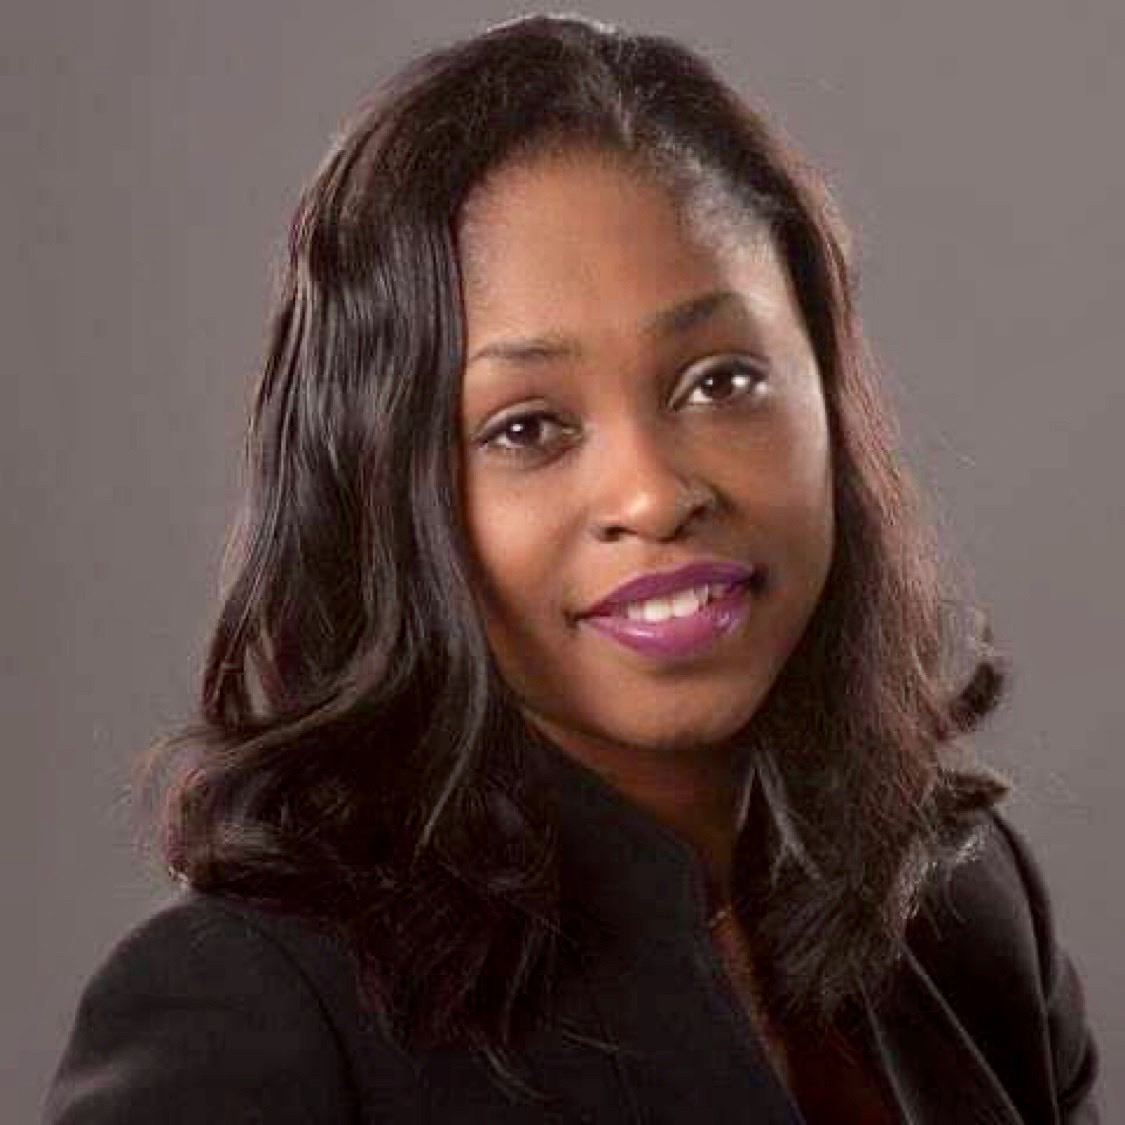 Attorney Moira Ogedegbe-Groves